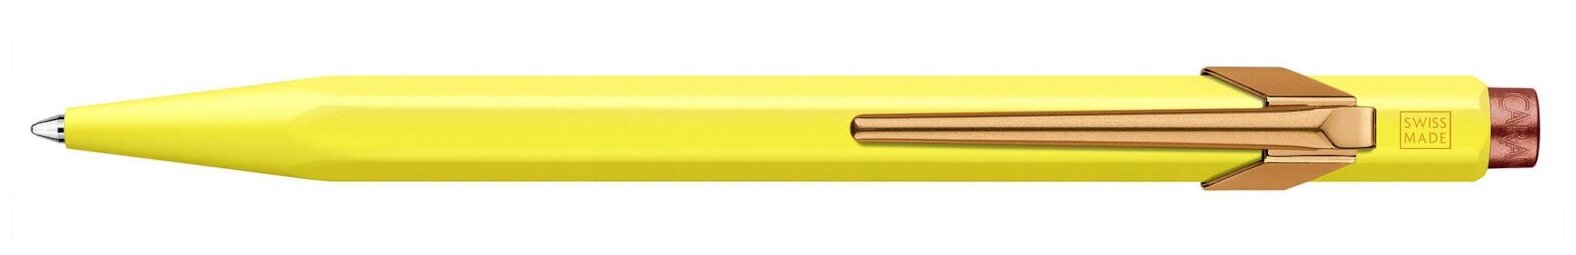 Ручка шариковая Carandache Office 849 Claim your style 2 (849.537) Canary Yellow, M, синие чернила